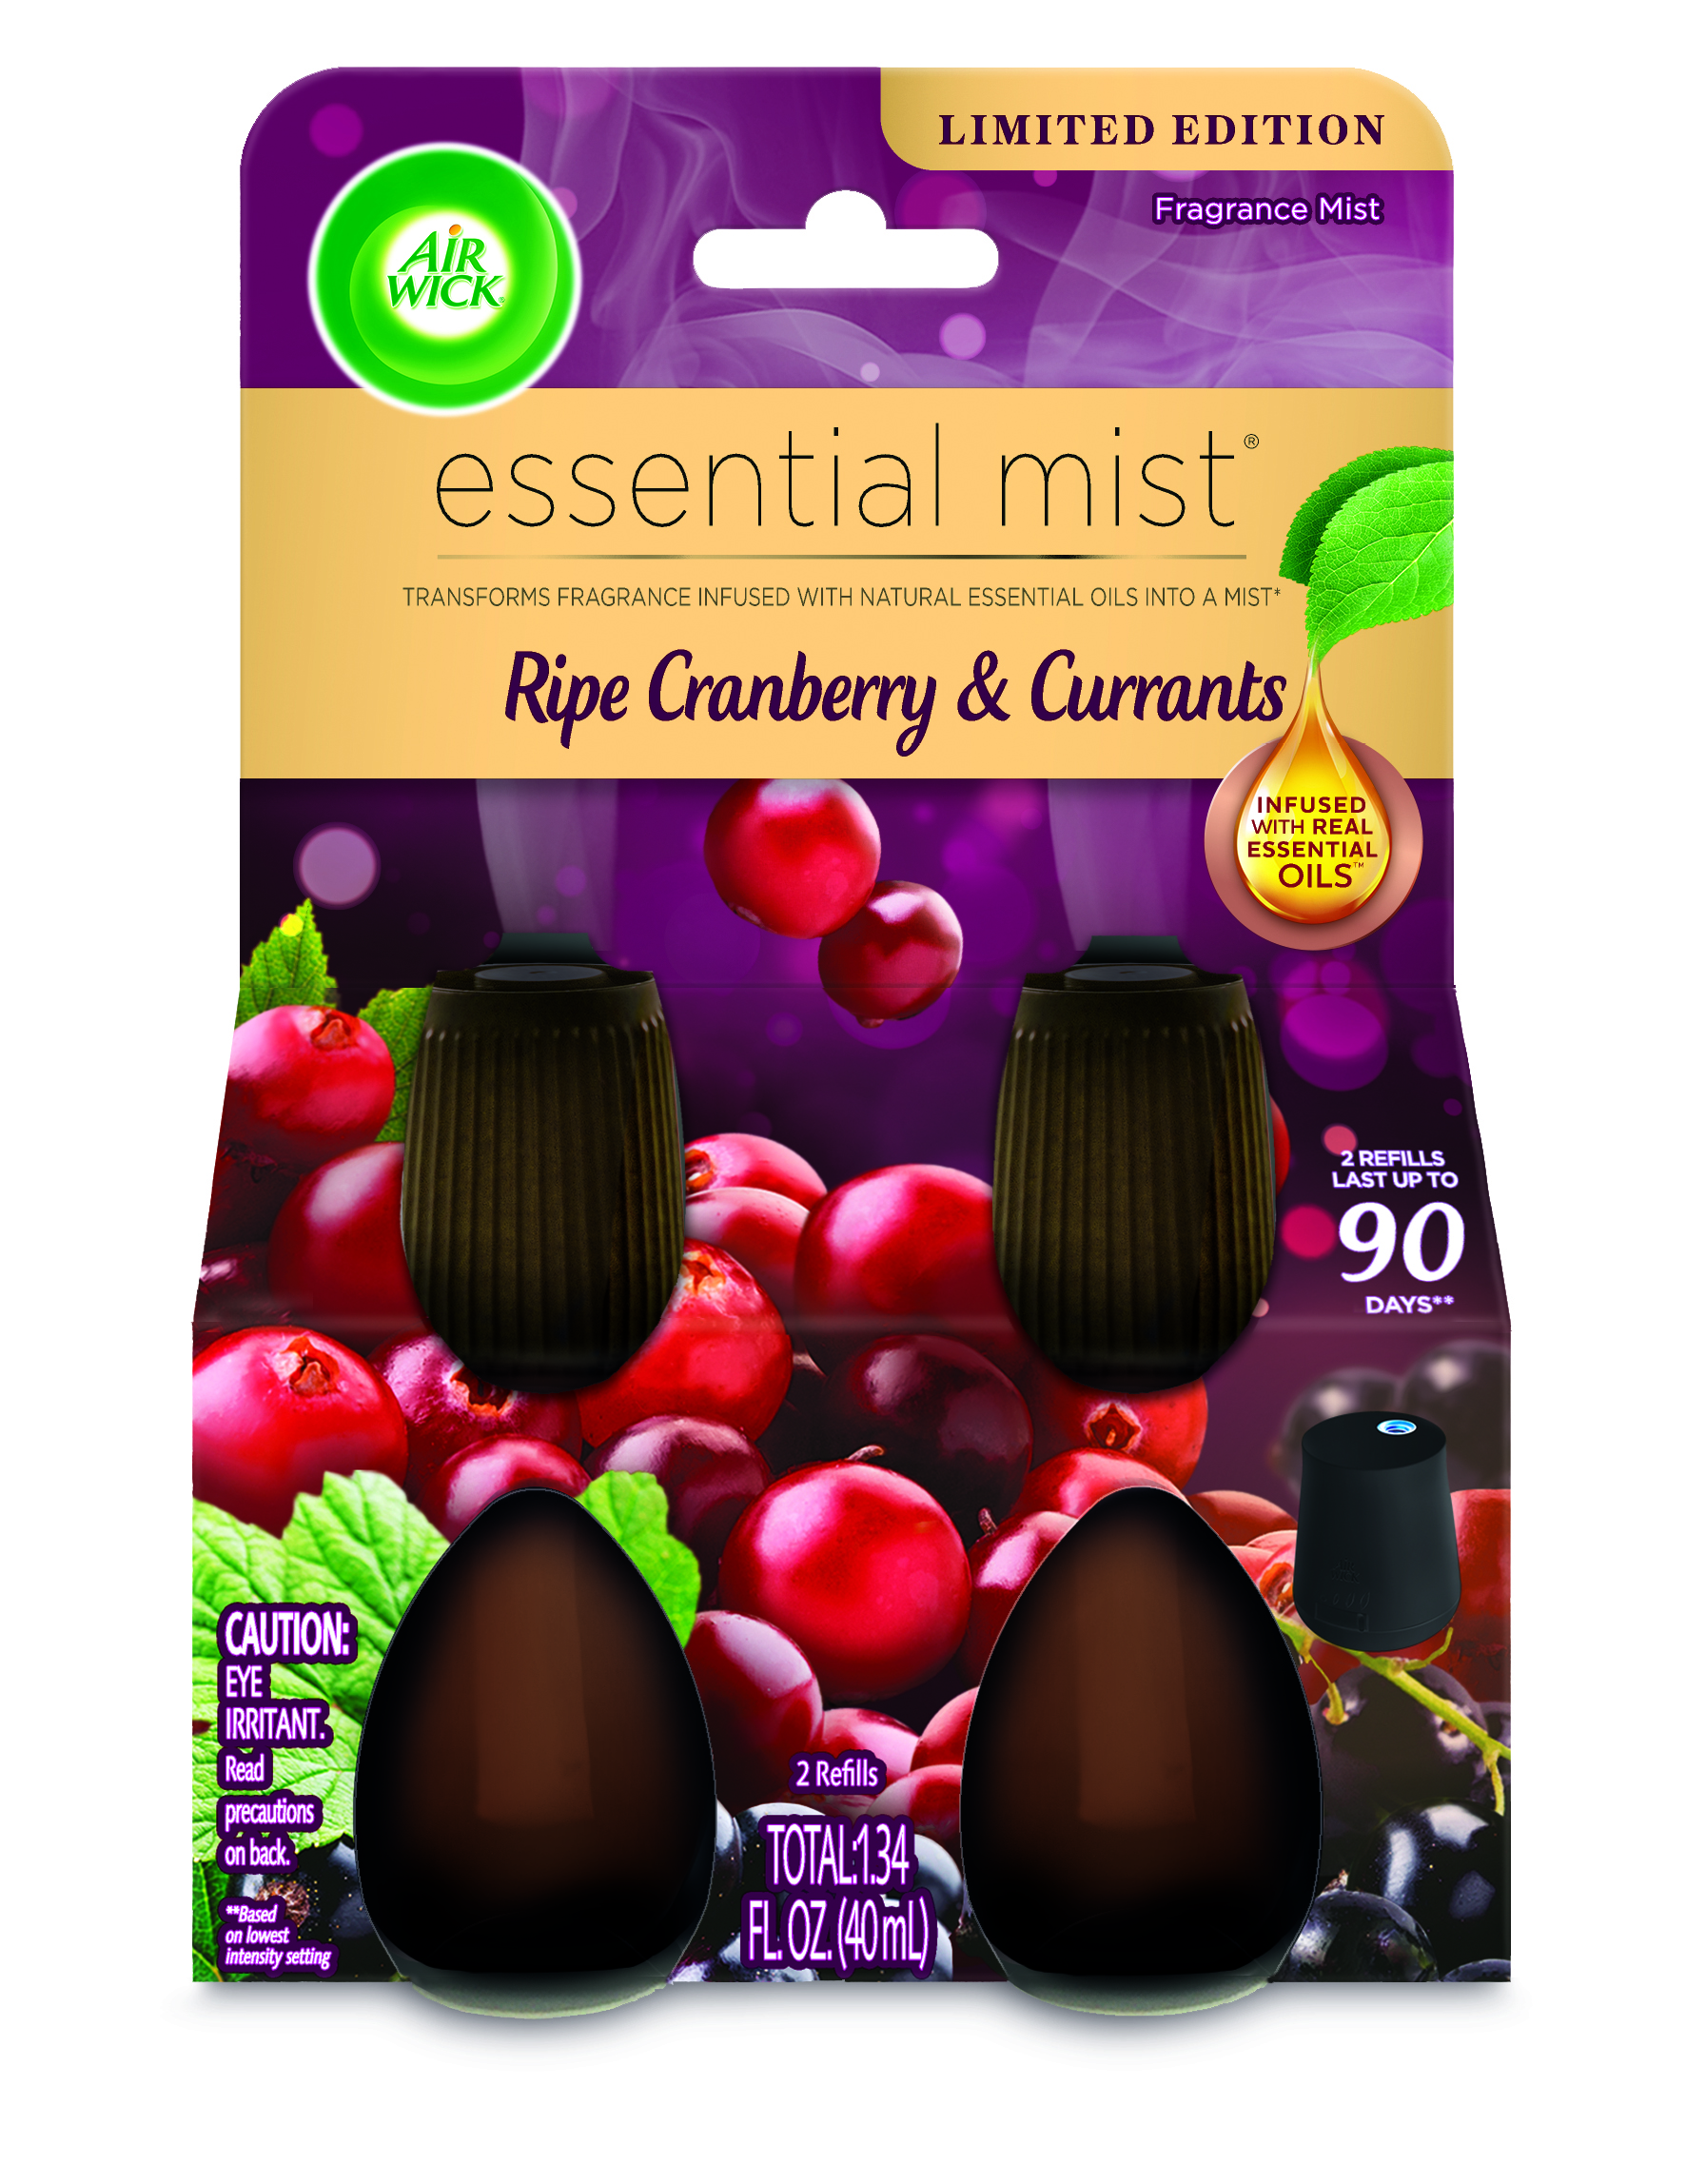 AIR WICK® Essential Mist - Ripe Cranberry & Currants